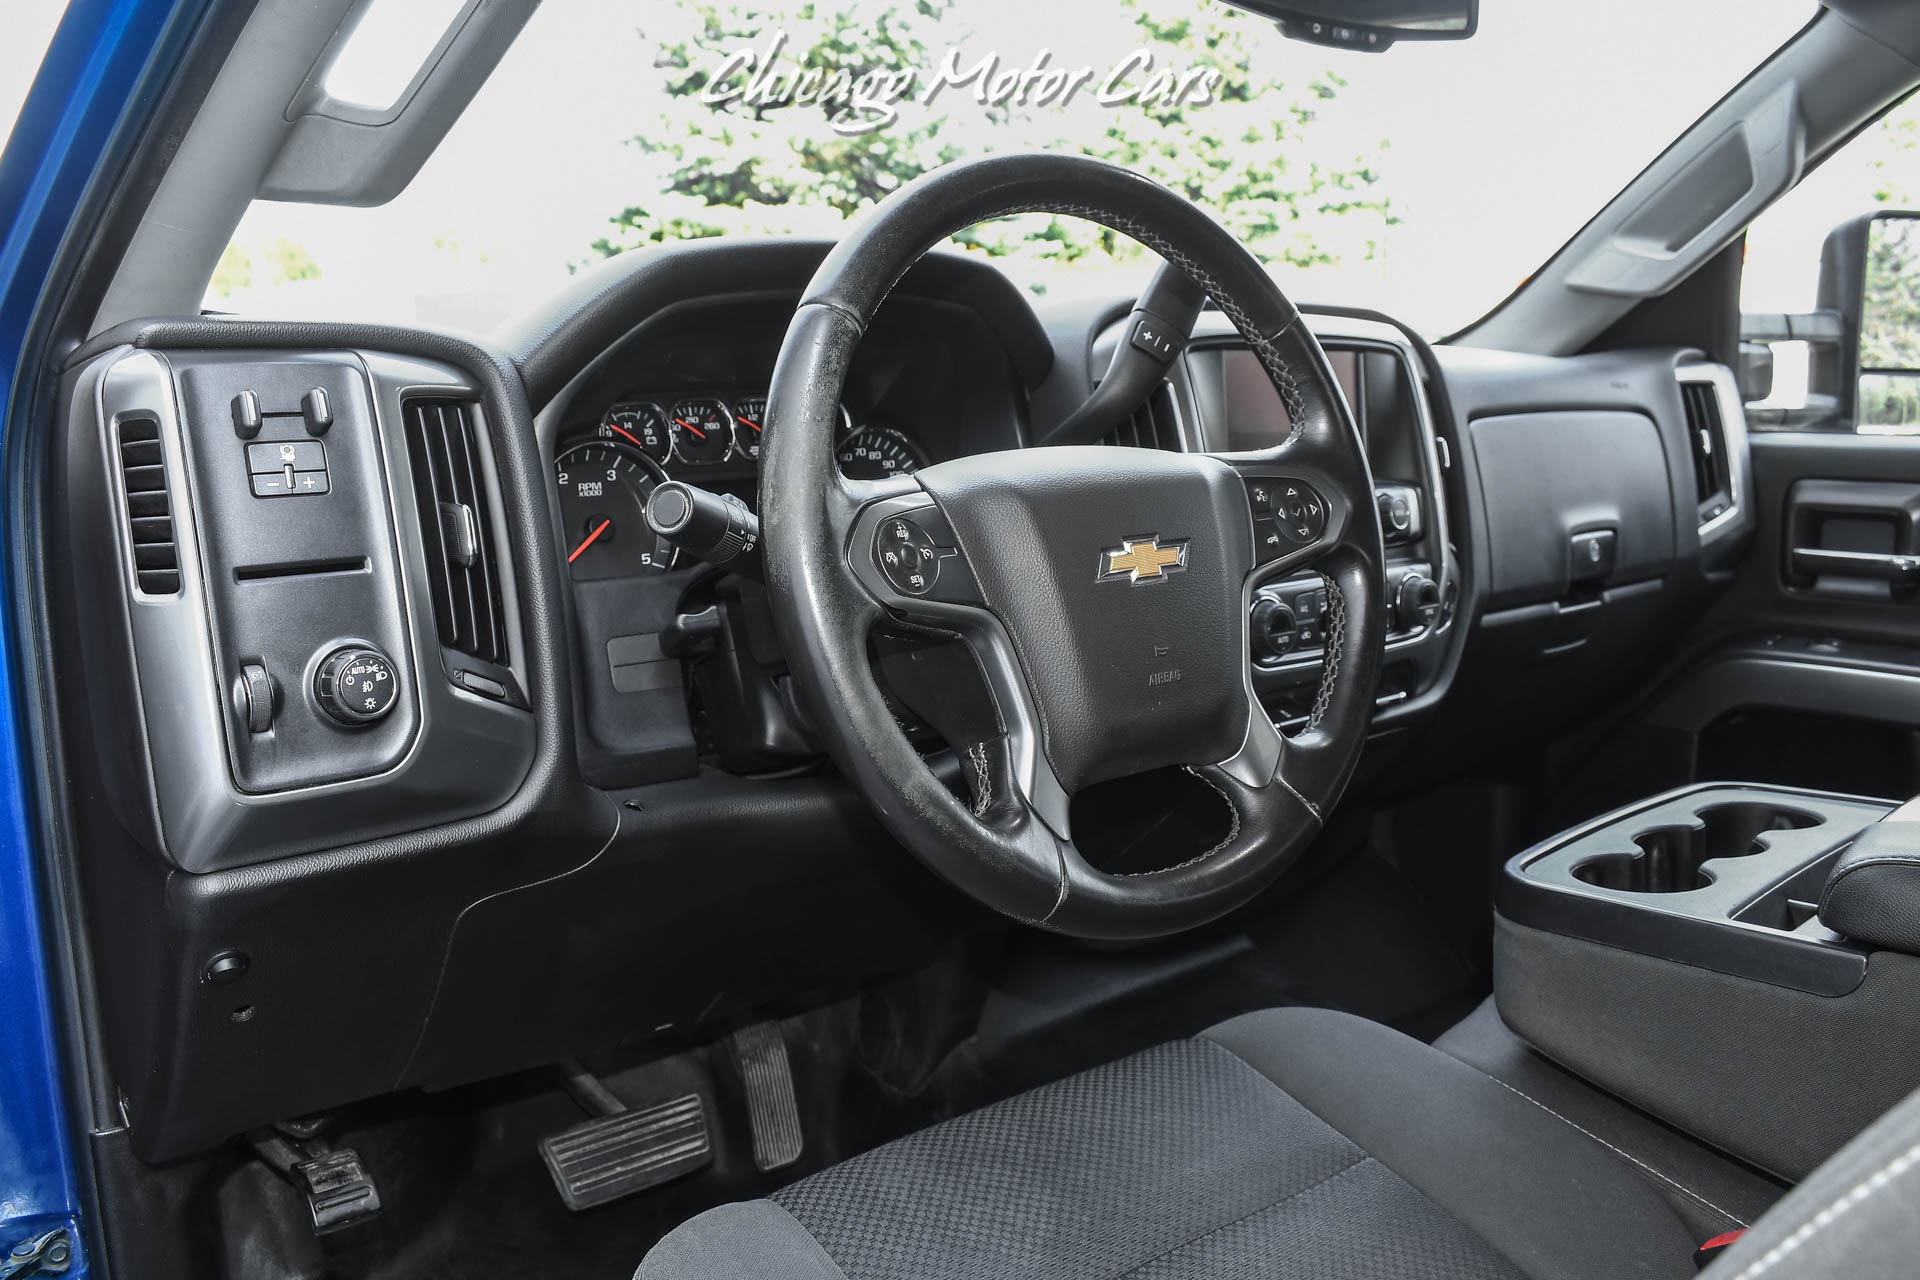 Used-2015-Chevrolet-Silverado-3500HD-LT-SRW-2WD-Crew-Cab-Duramax-66L-Diesel-Turbo-V8-LT-CONVENIENCE-PACKAGE